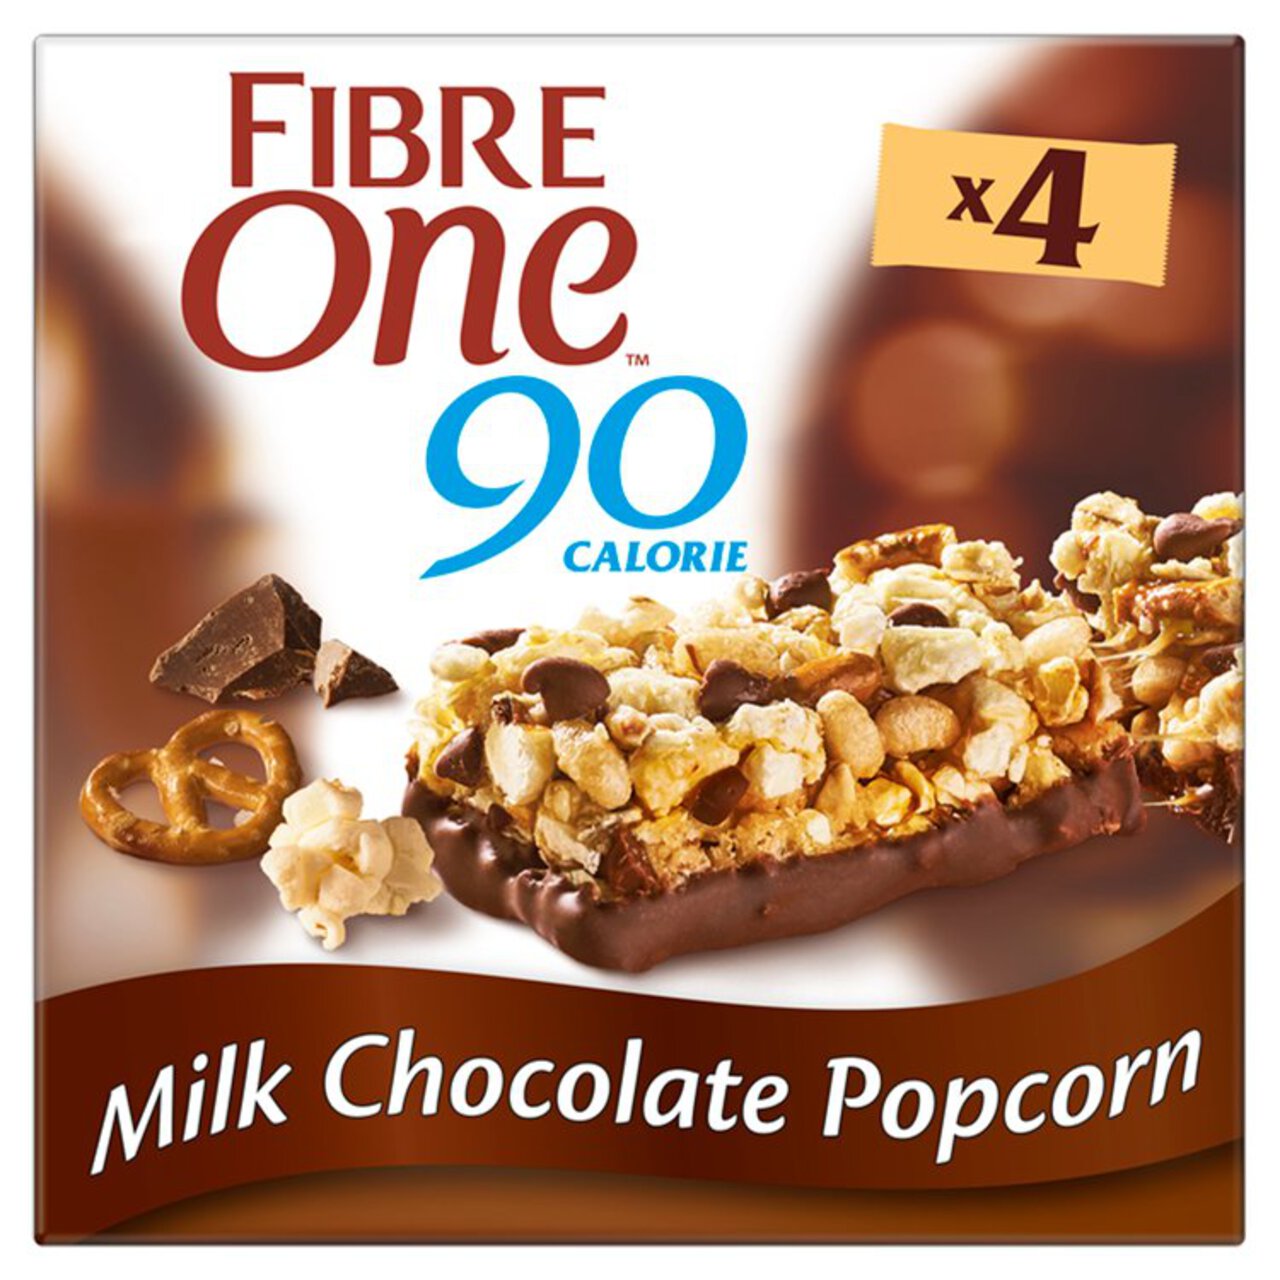 Fibre One 90 Calorie Milk Chocolate Popcorn Bars 4 x 21g